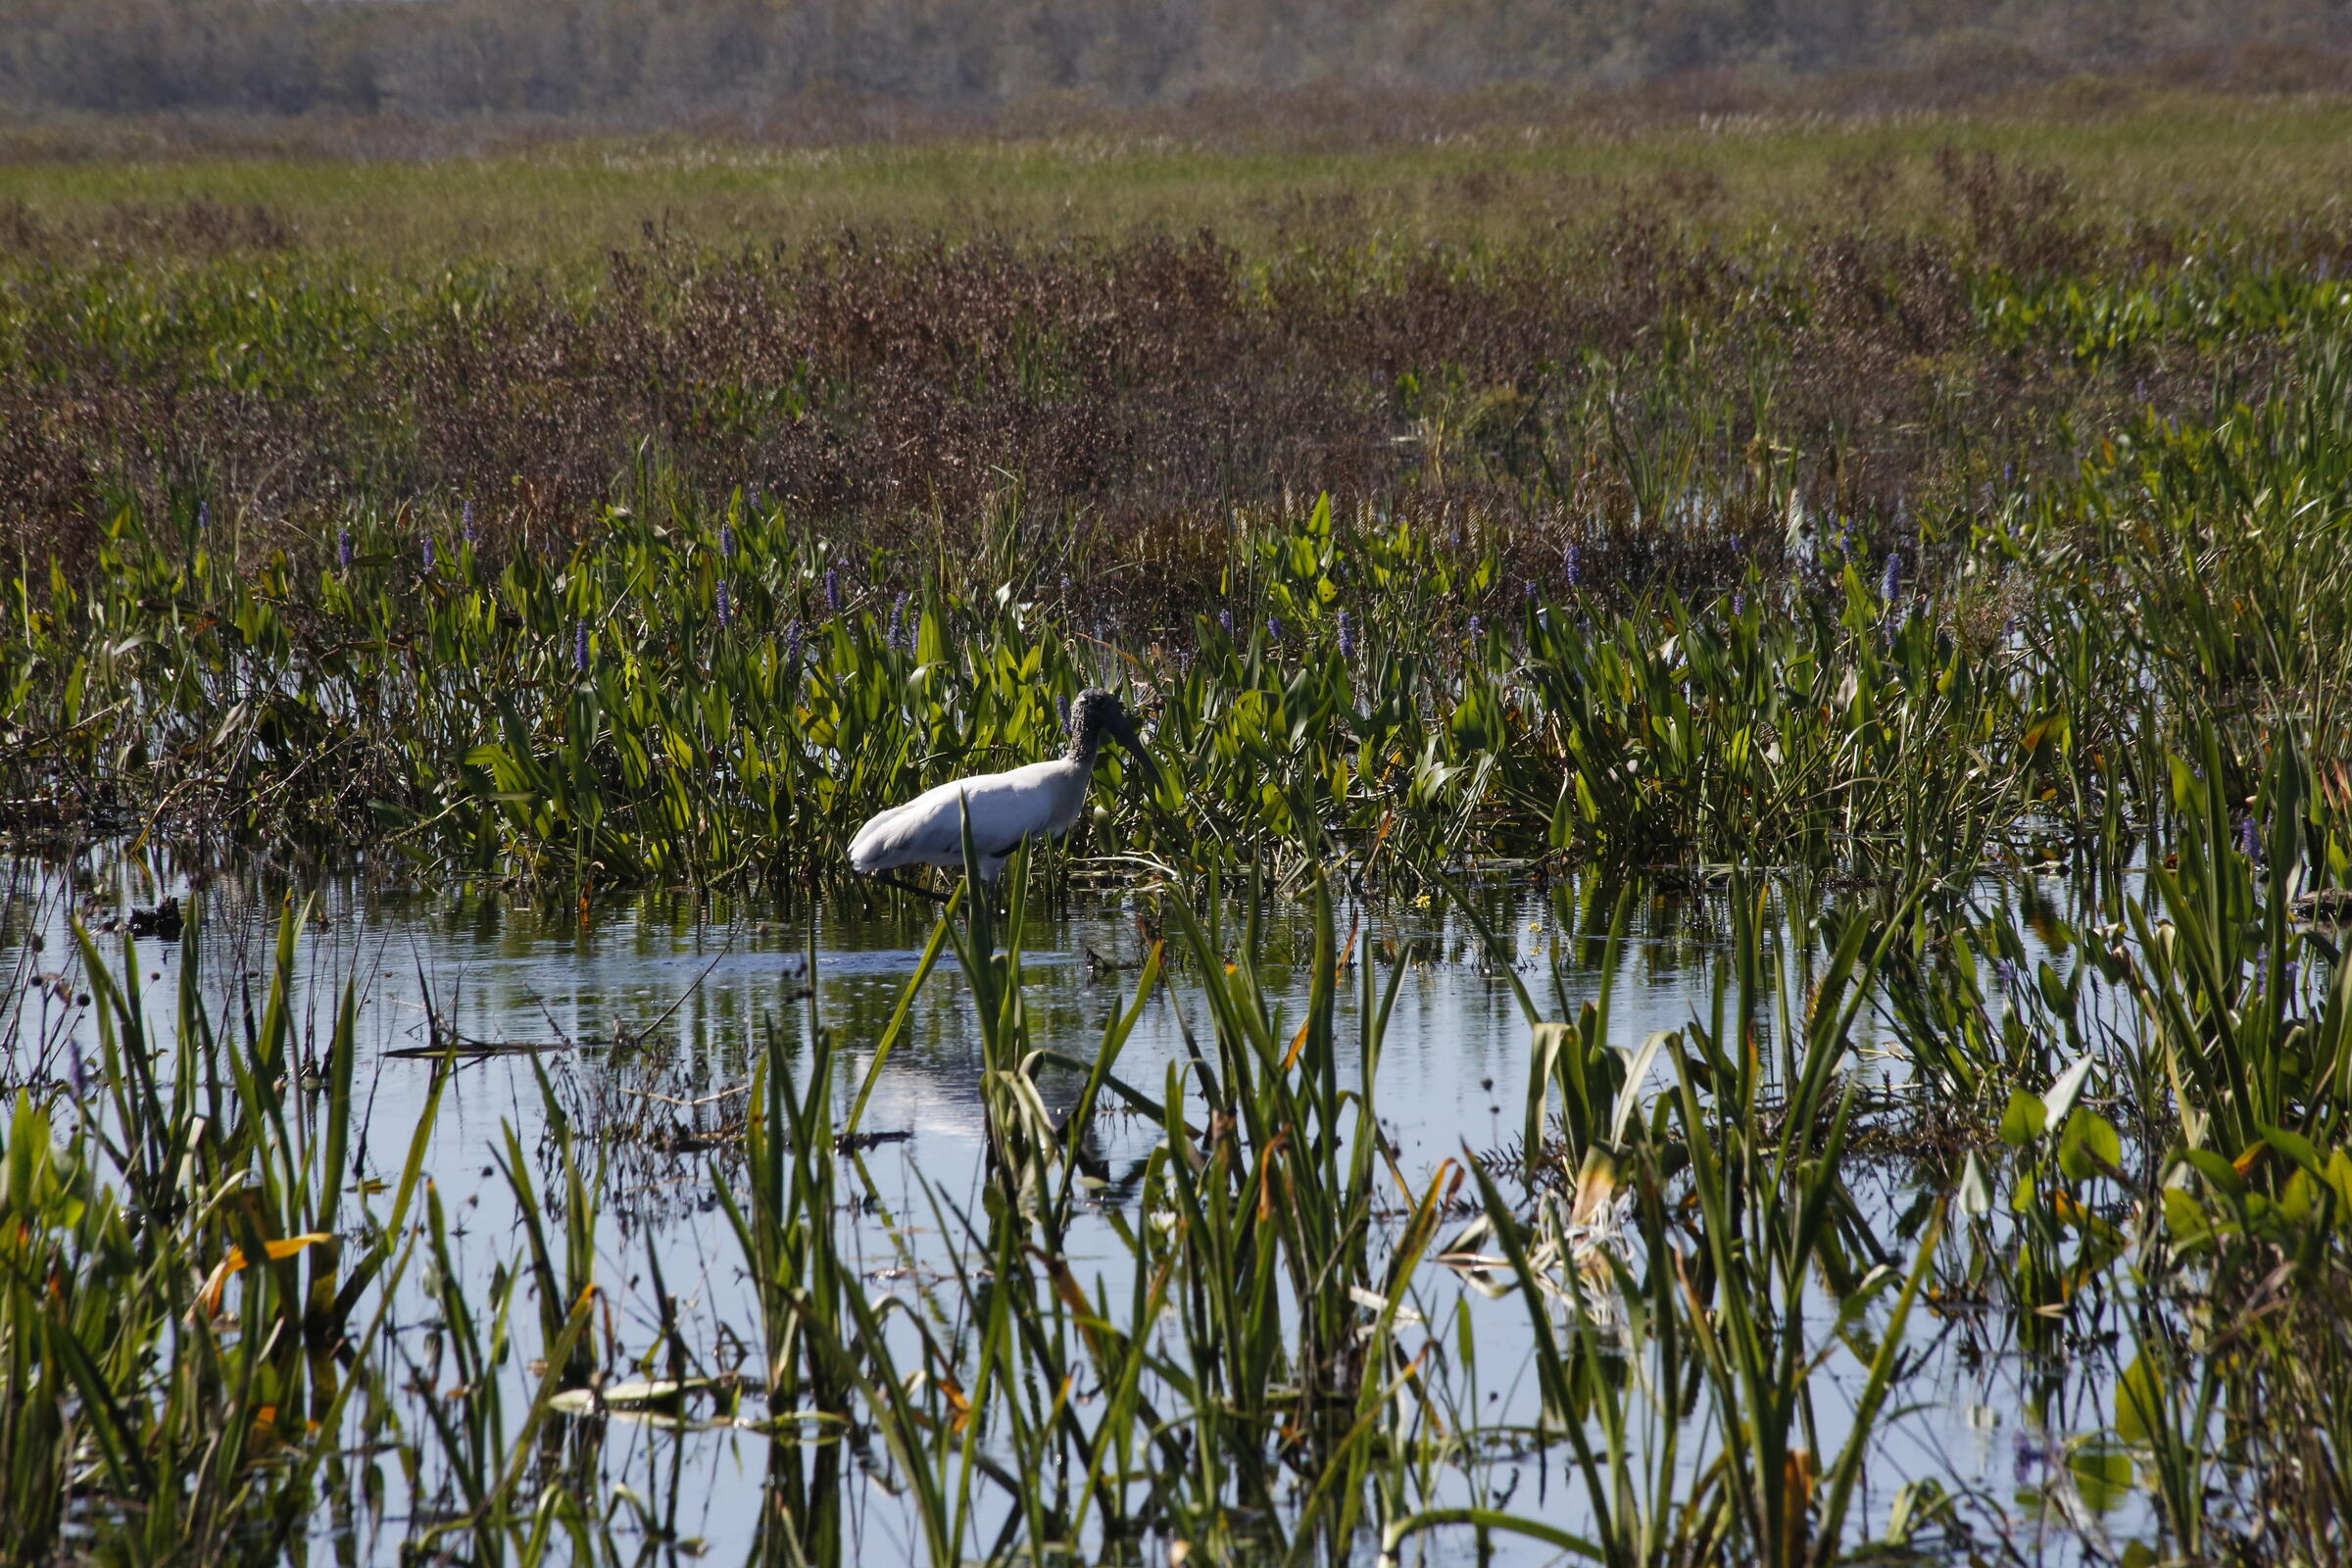 A wading bird in a restored wetland.